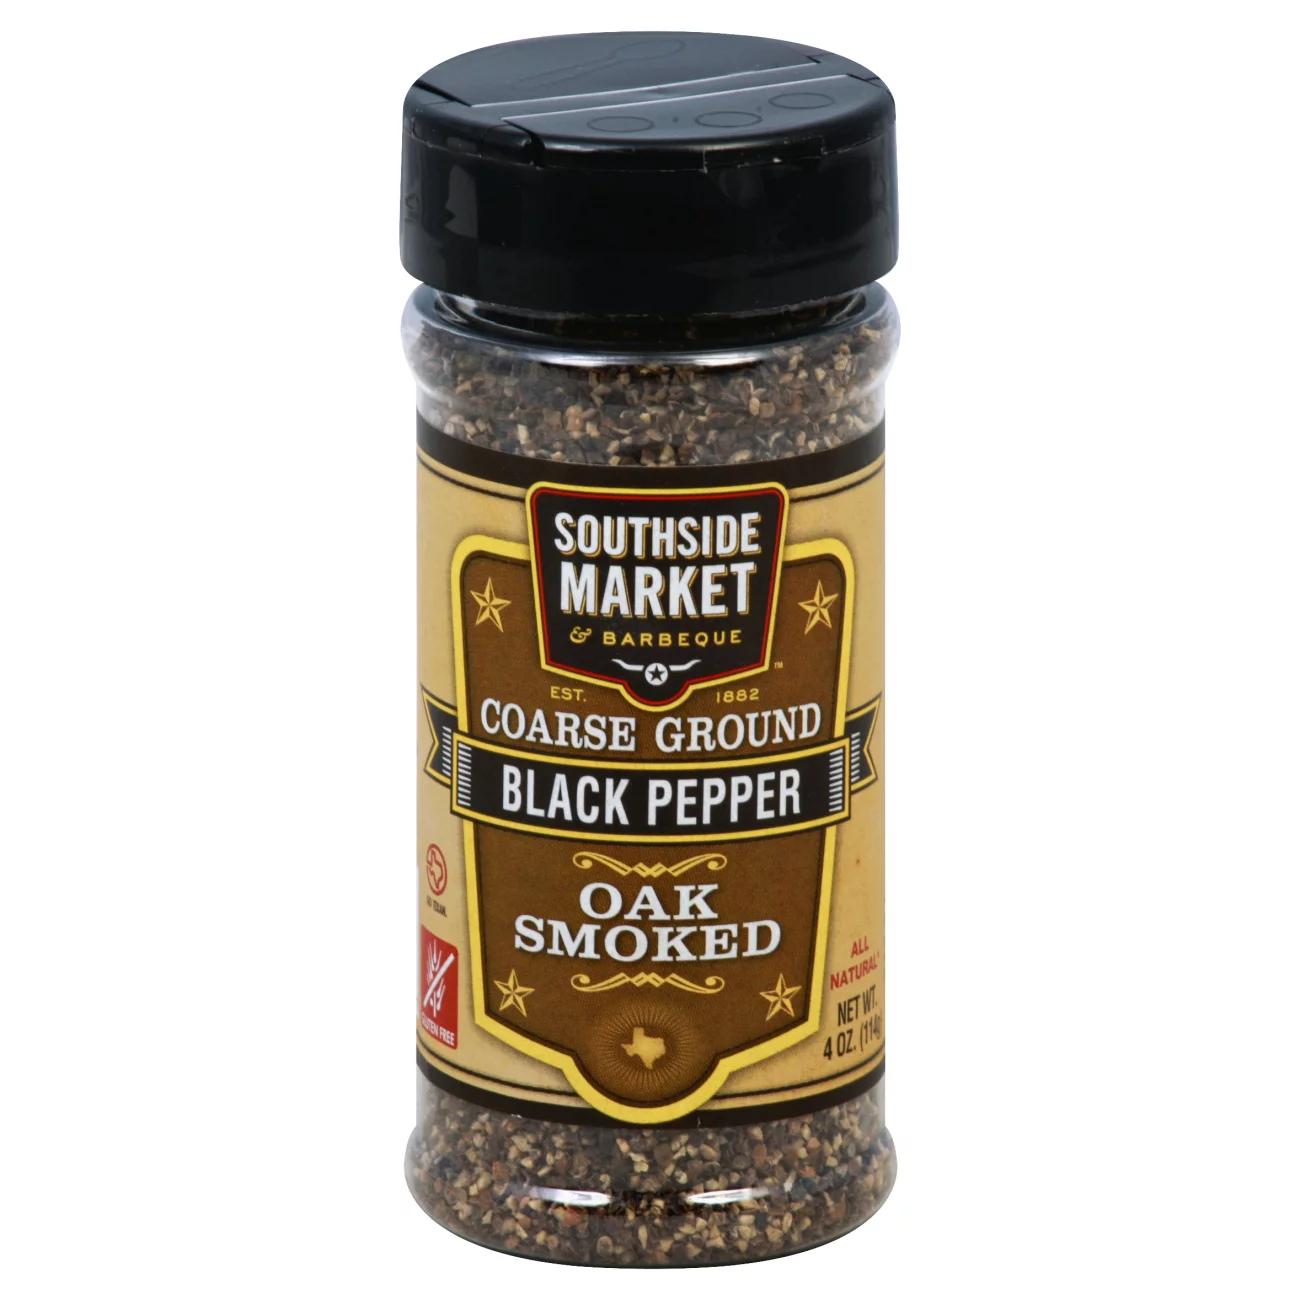 smoked pepper seasoning - What is pepper seasoning made of